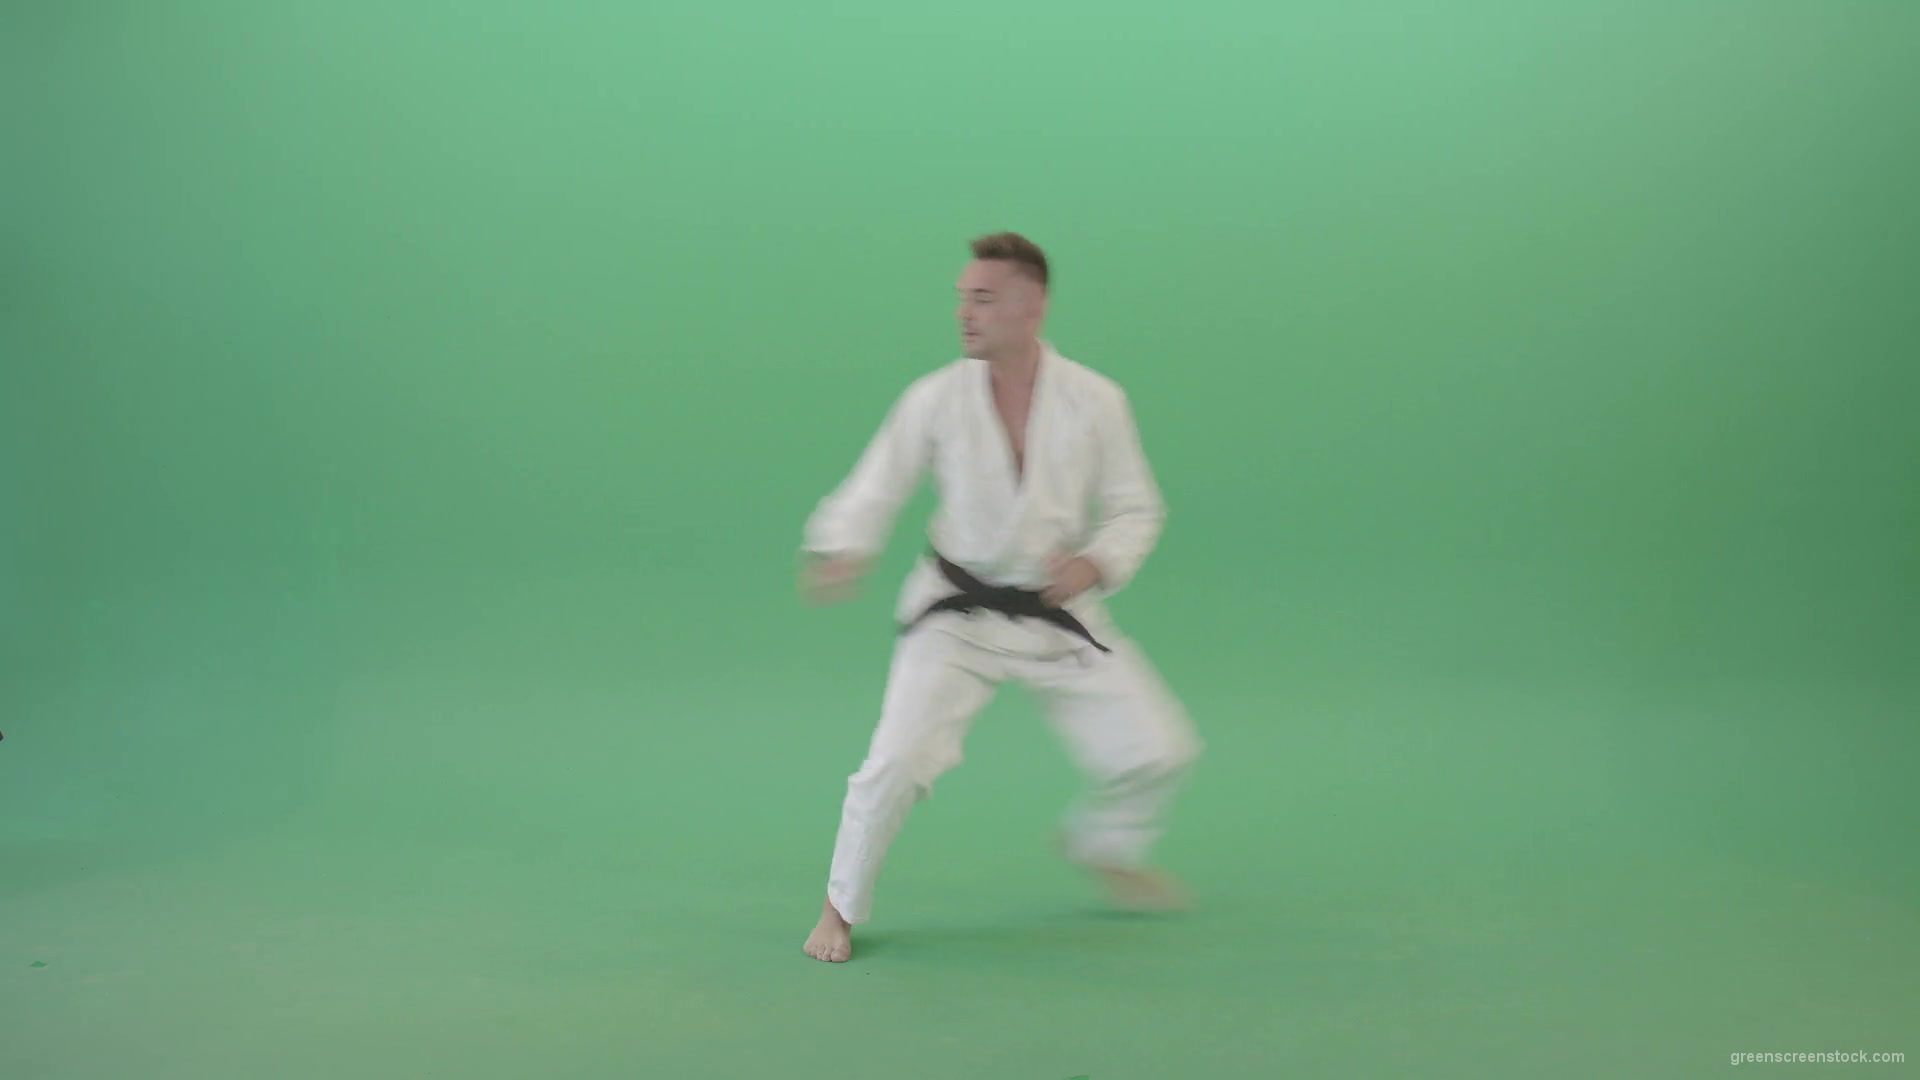 Mortal-Kombat-by-Karate-Ju-Jutsu-trainer-sportsman-isolated-on-green-screen-4K-Video-Footage-1920_007 Green Screen Stock